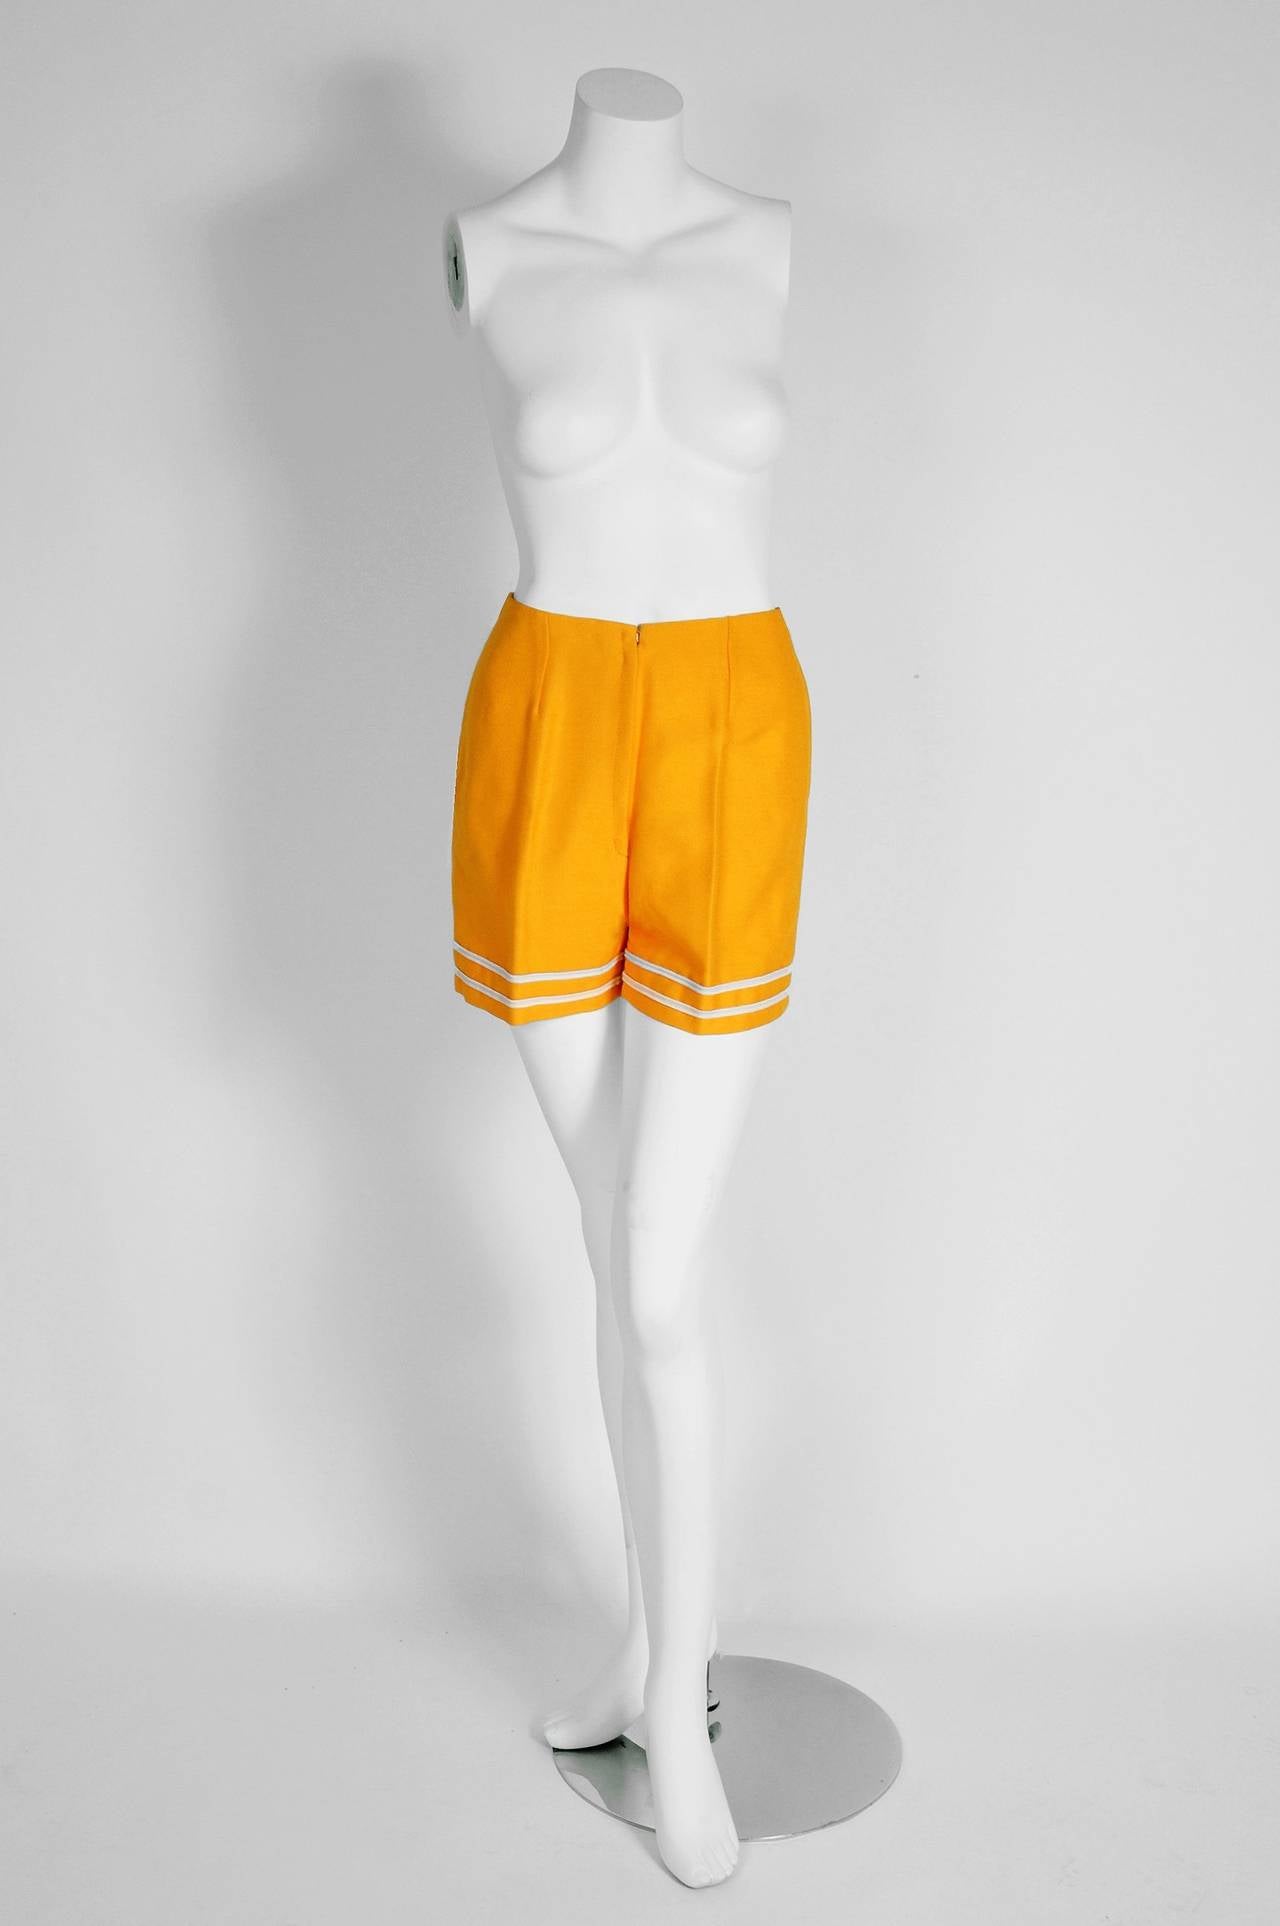 1969 Pierre Cardin Documented Yellow Linen Space-Age Stripe Mod Dress & Shorts 1